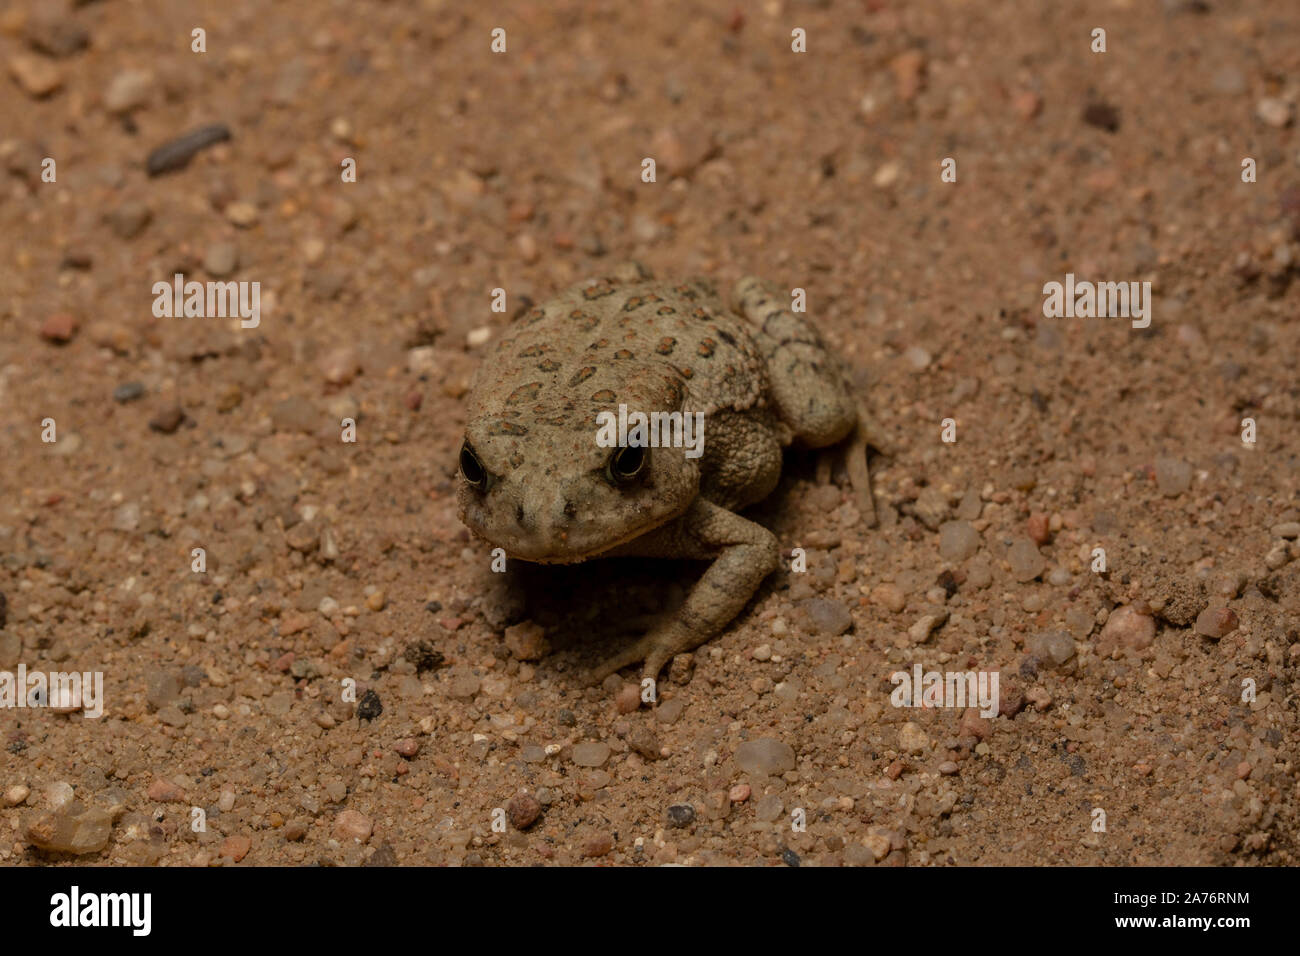 Rocky Mountain (Toad Anaxyrus woodhousii woodhousii) du comté de Morgan, Colorado, USA. Banque D'Images